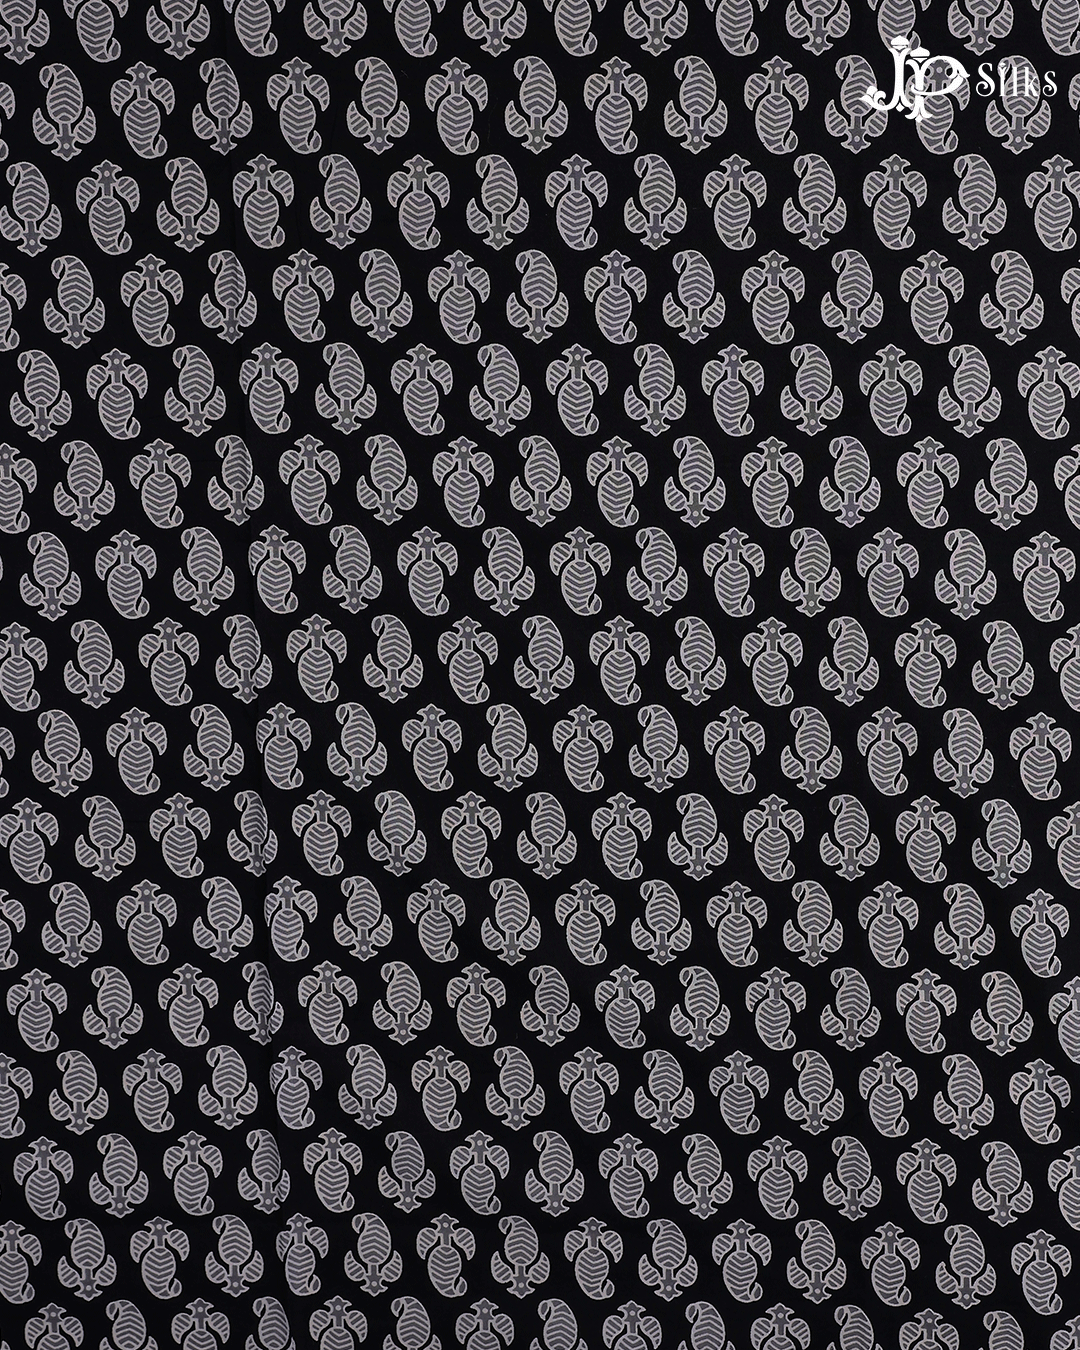 Black and White Mango Motif Cotton Fabric - D1770 - View 2